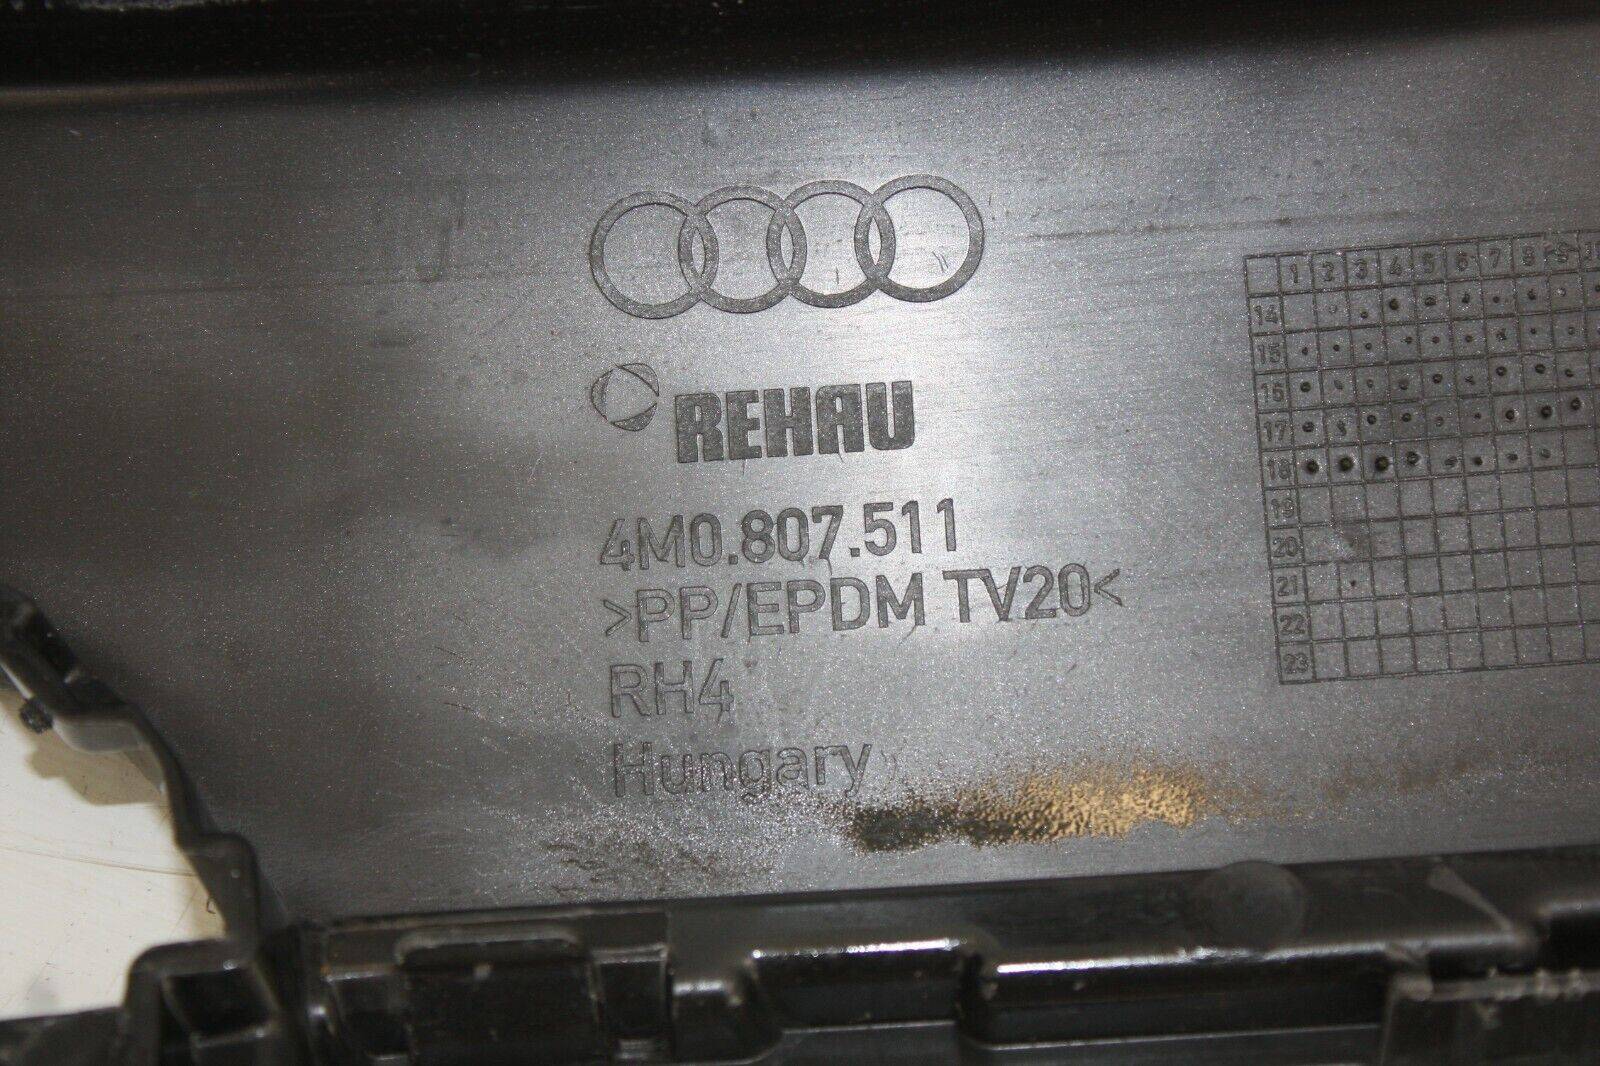 Audi-Q7-S-Line-Rear-Bumper-Upper-Section-2015-TO-2019-4M0807511-Genuine-175367538875-8